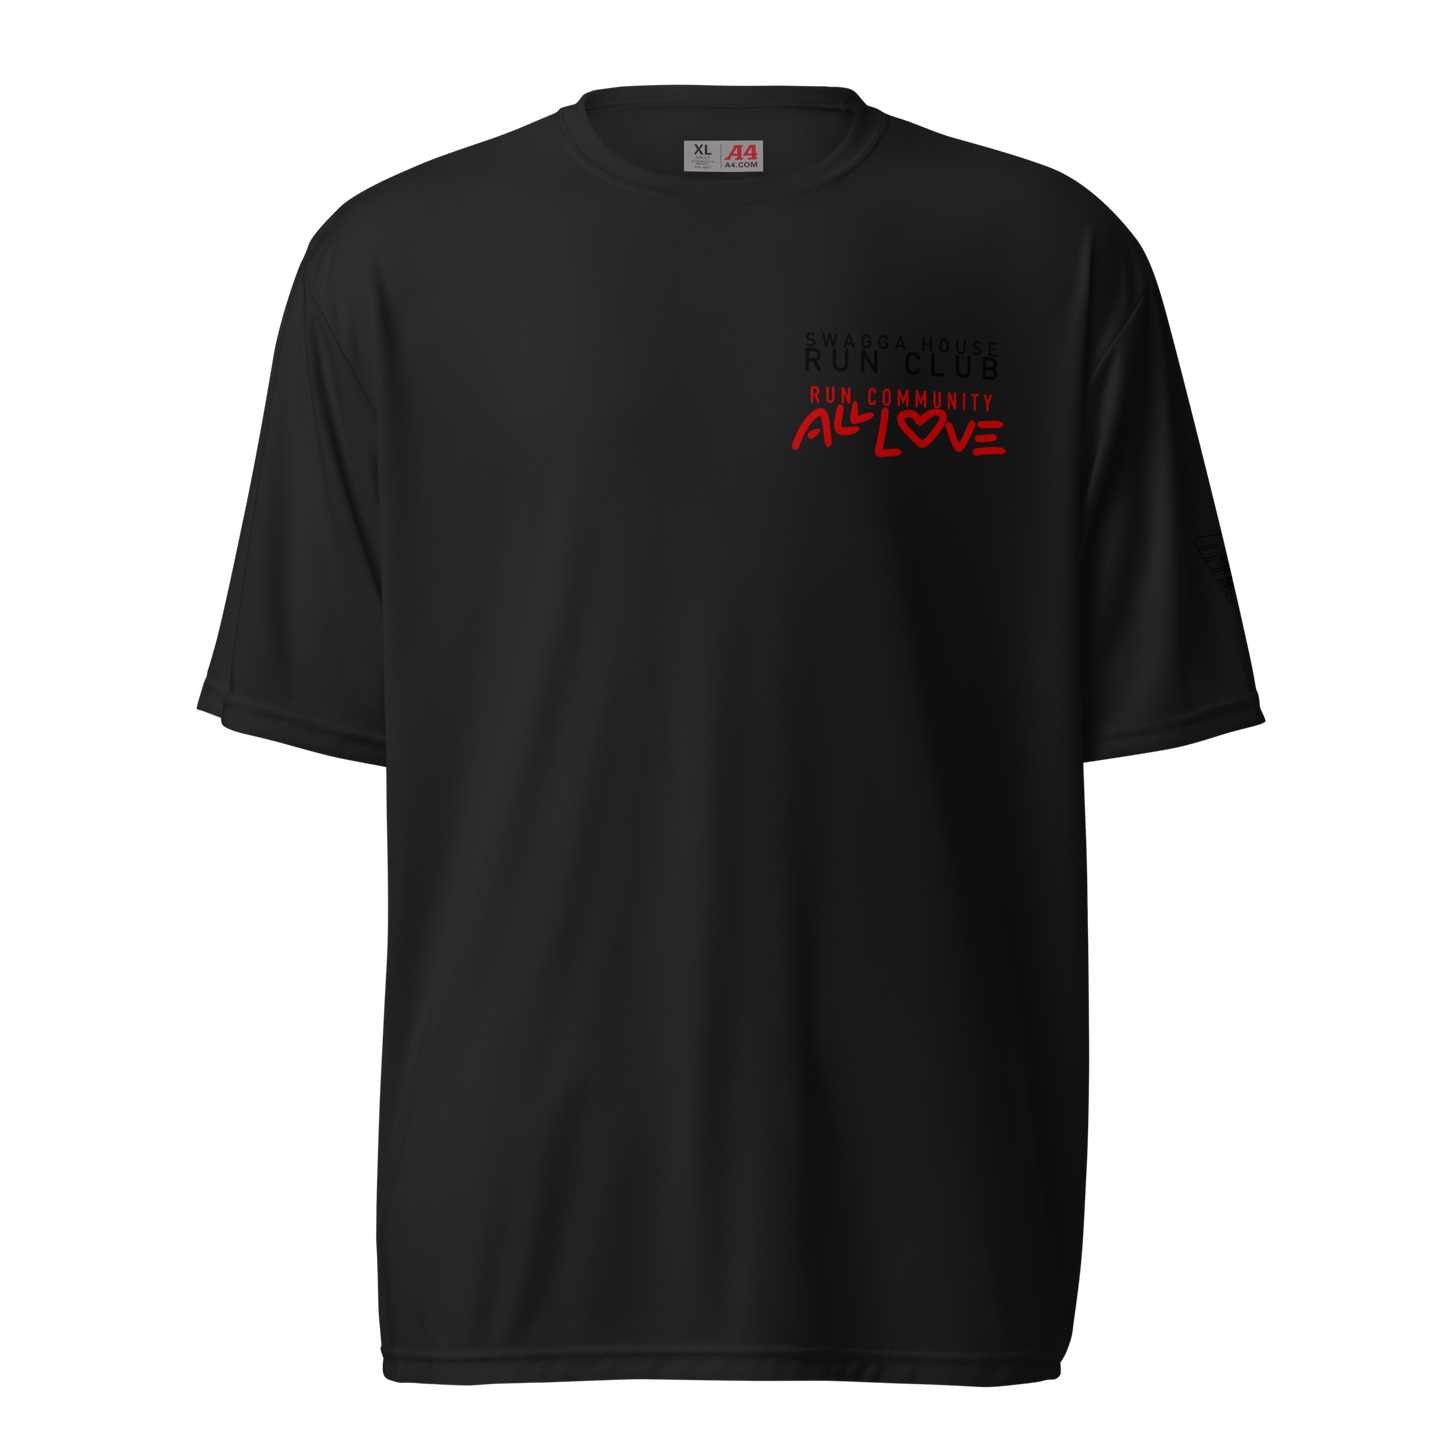 LOVE GOES A LONG WAY Unisex performance crew neck t-shirt